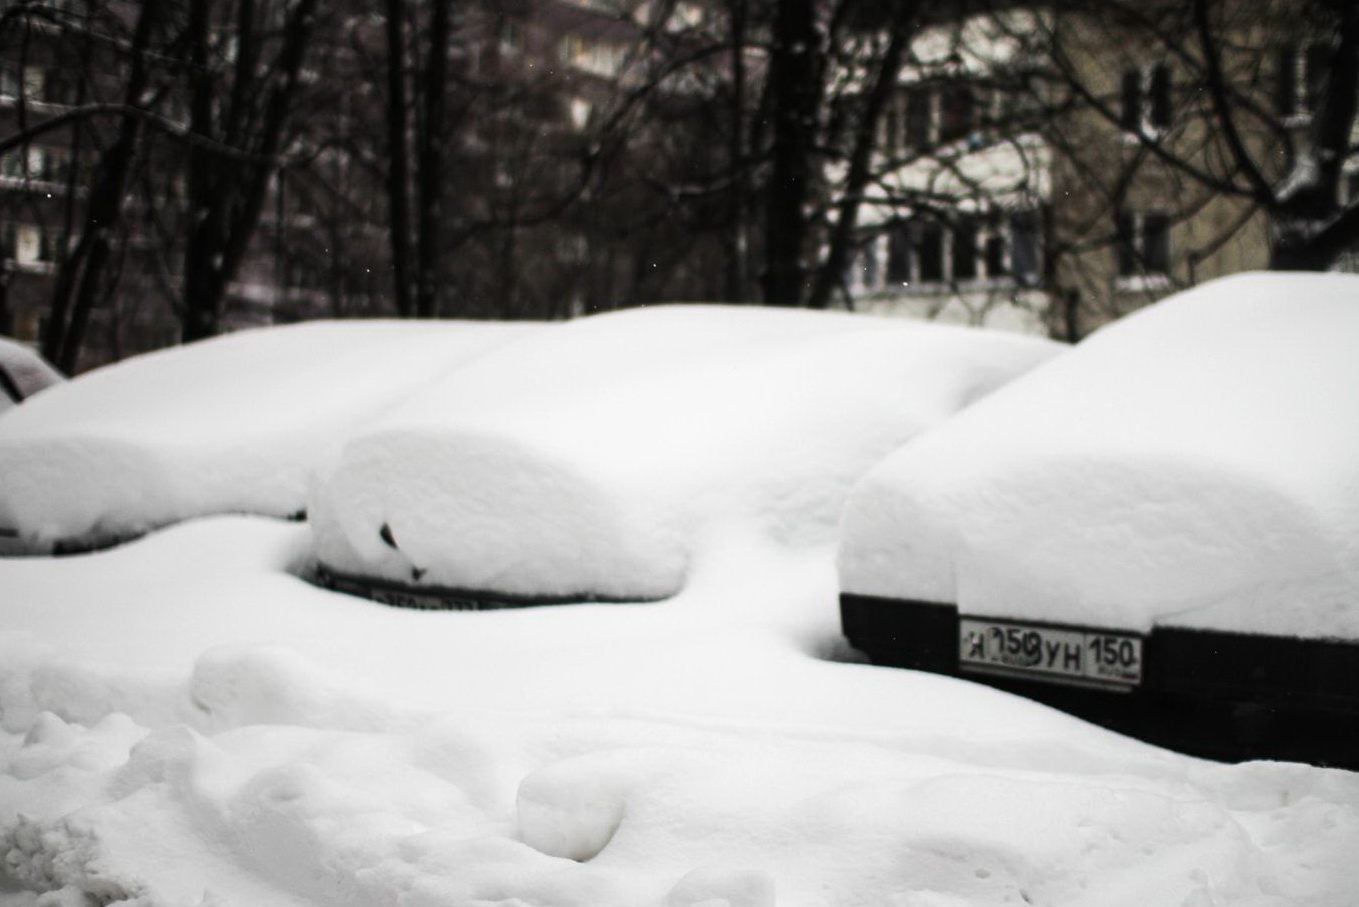 Сахалинец погиб в машине под толщей снега